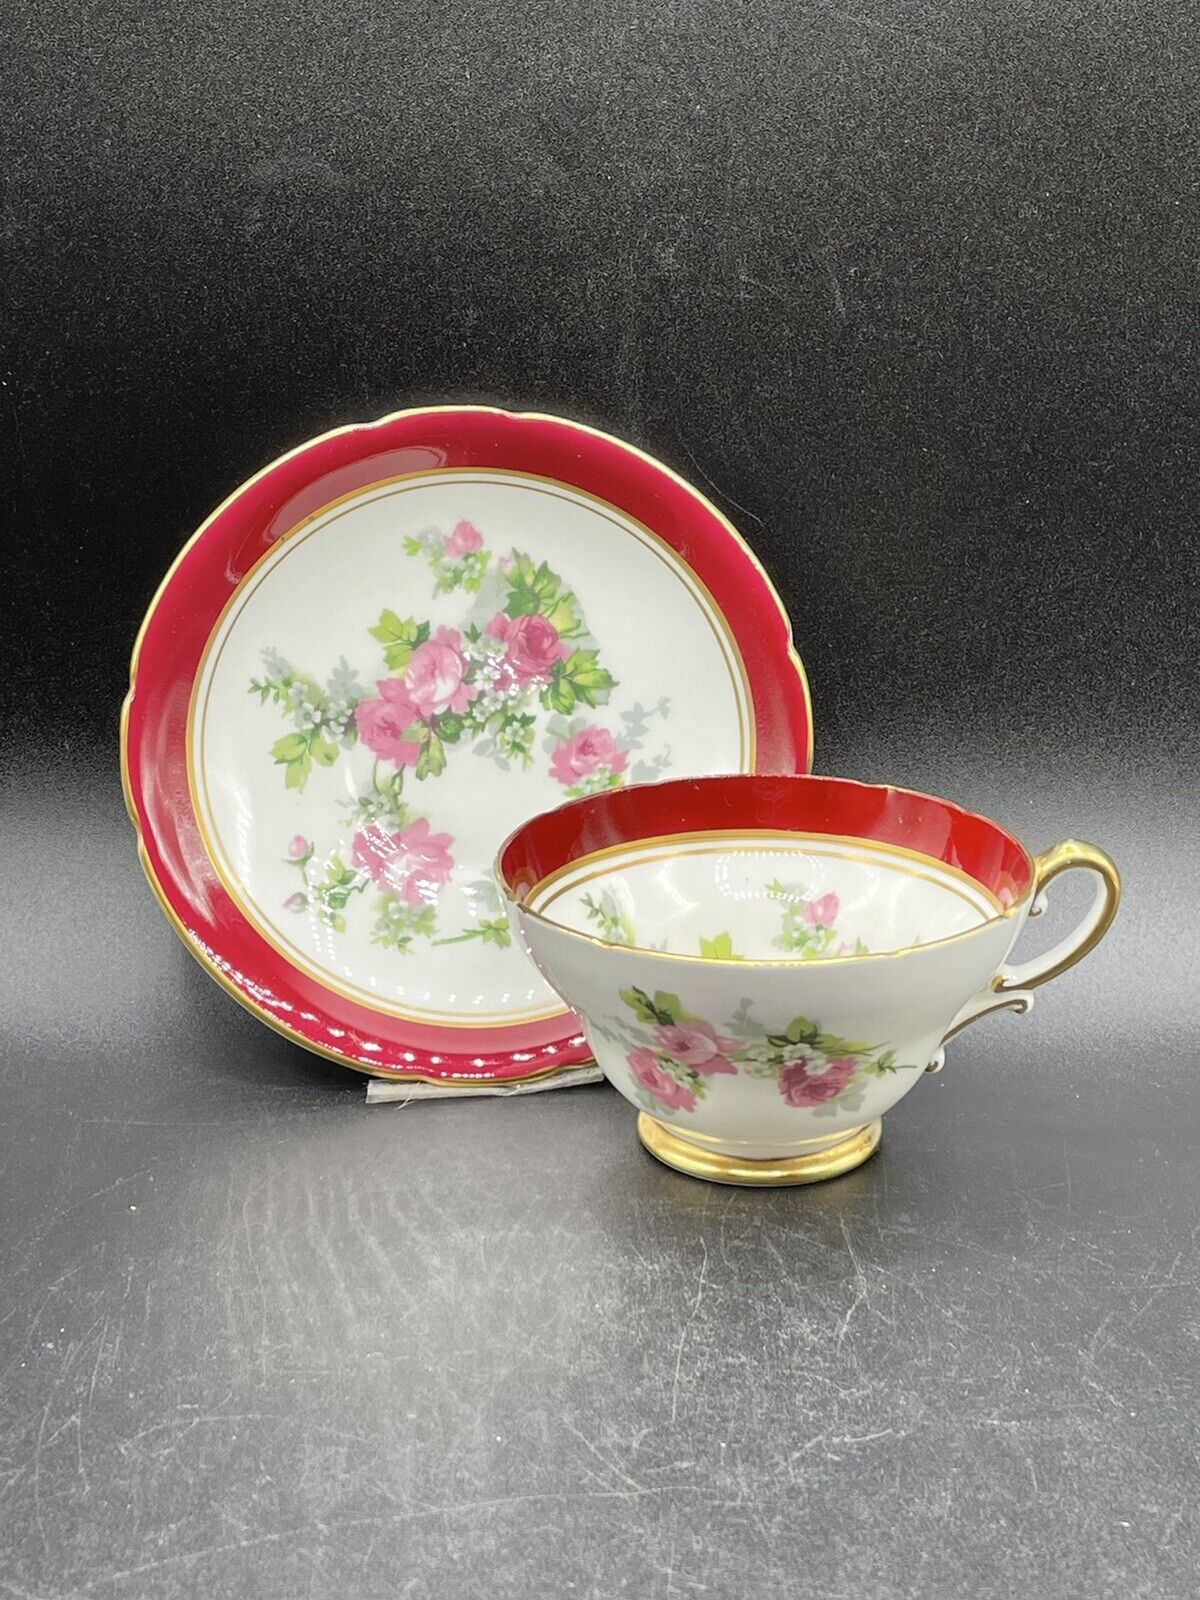 Stanley Tea Cup Saucer Pink Rose Vintage White Gold Red England